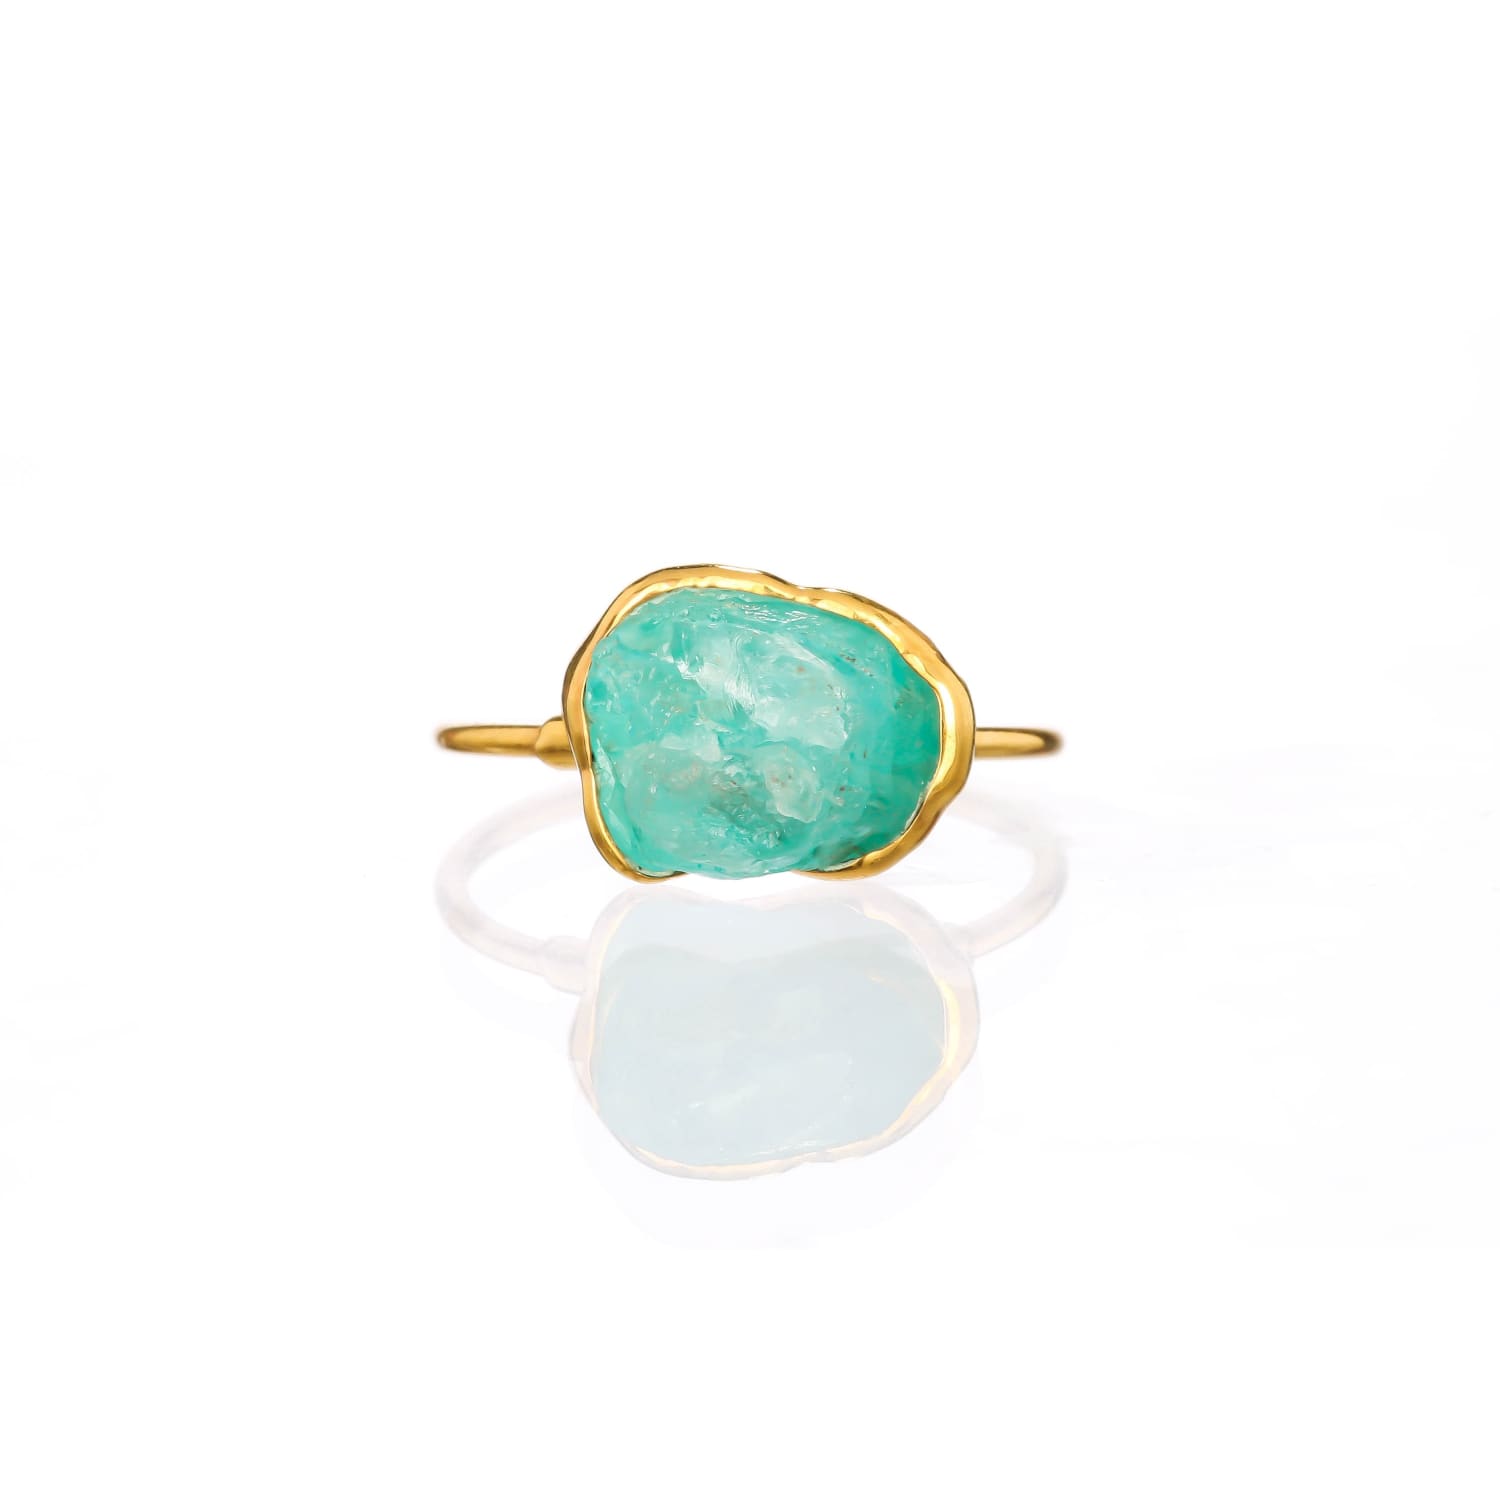 Raw Blue Apatite Ring Gemstone Jewelry Rough Crystal Stone